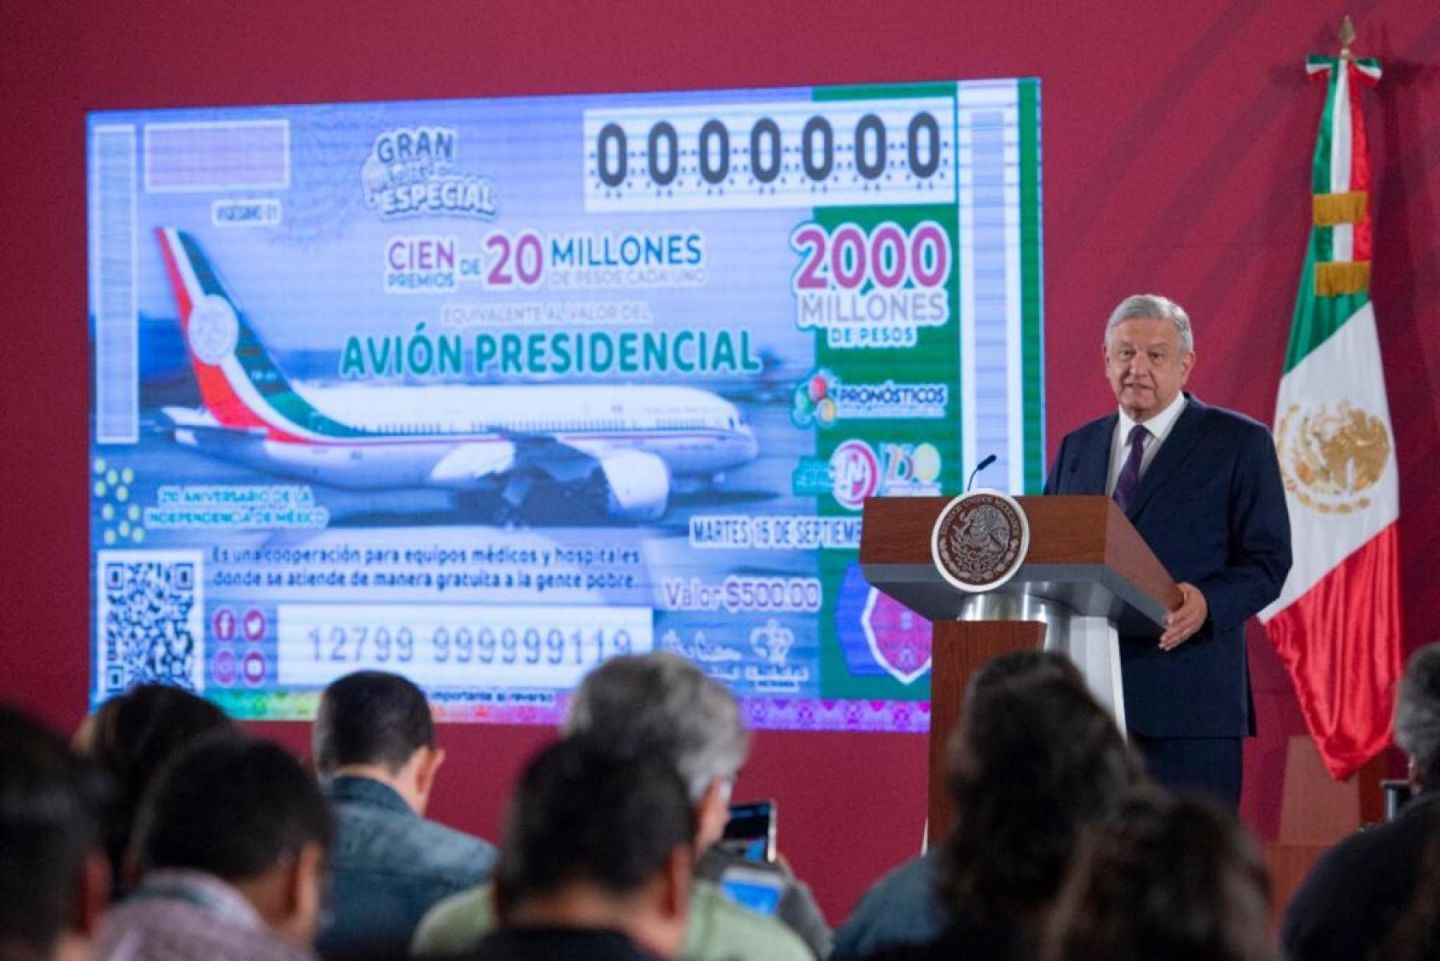 Avión presidencial sí se rifará: AMLO